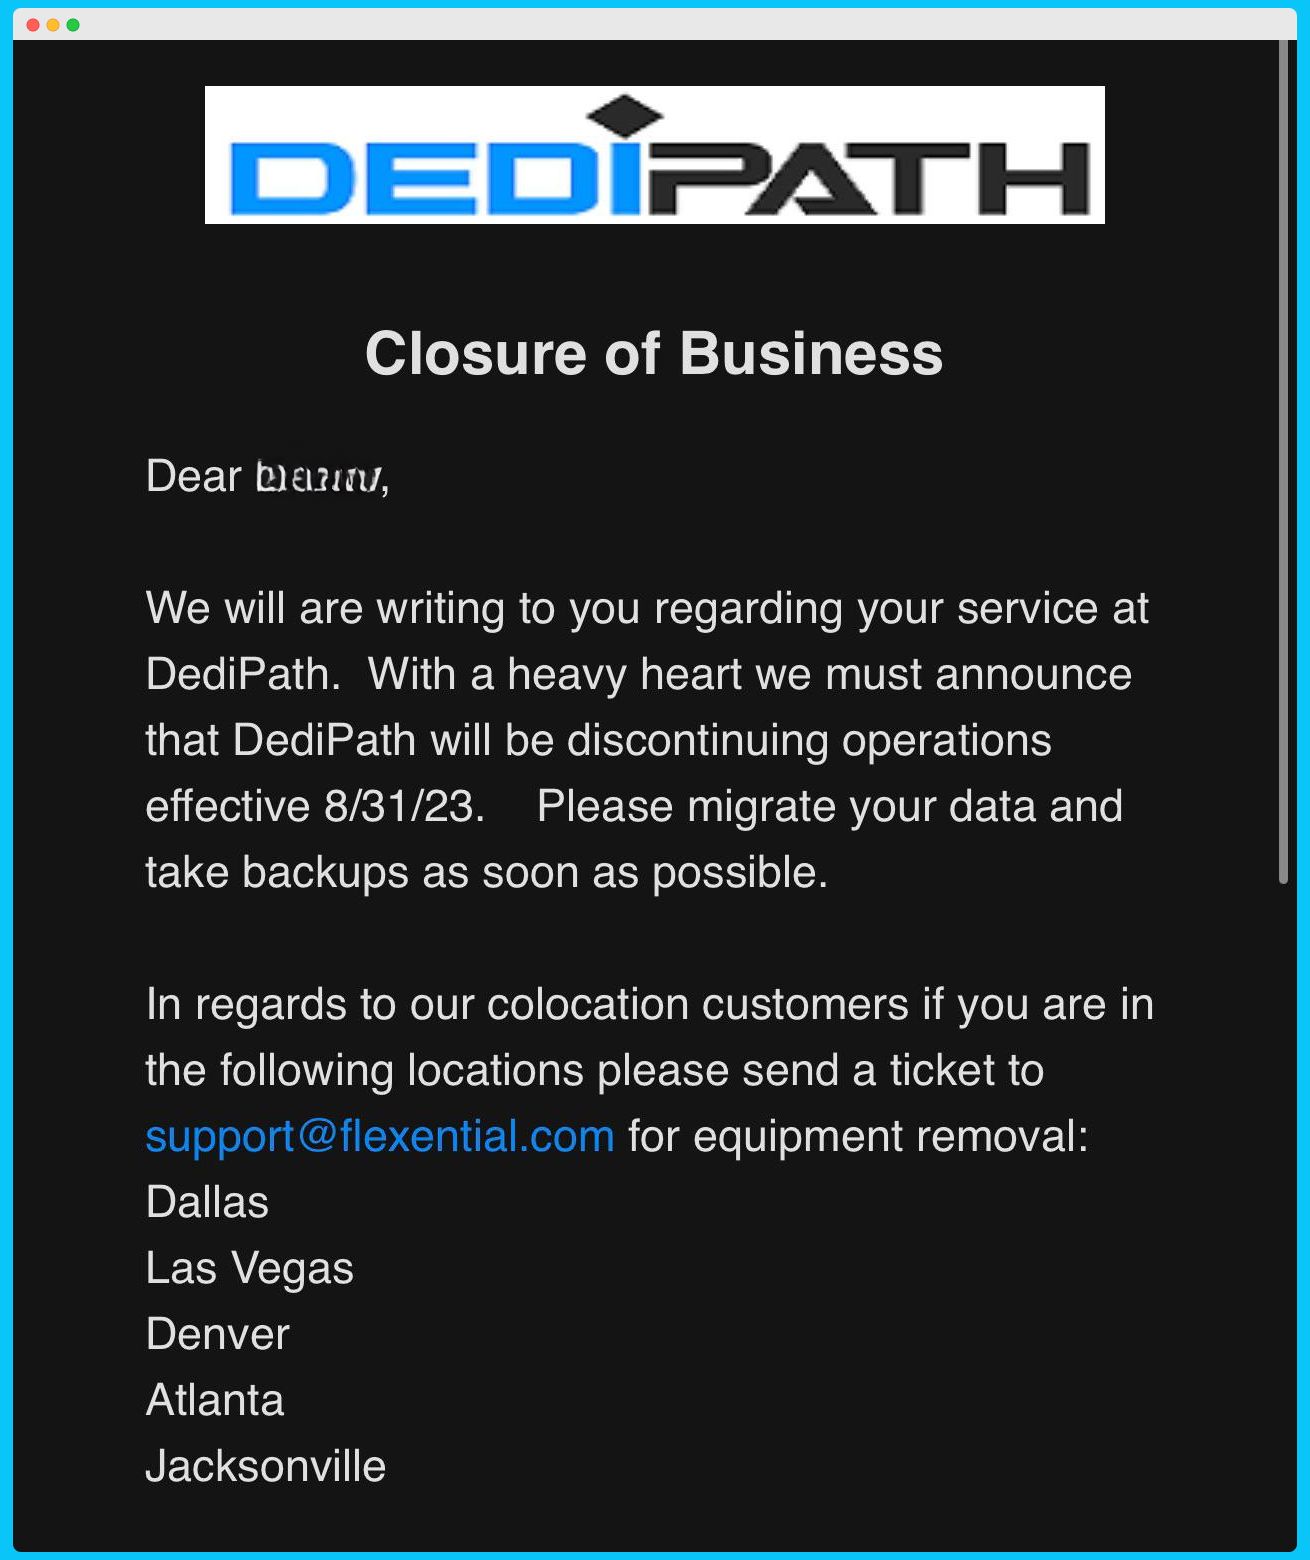 Why Is DediPath Shutting Down?